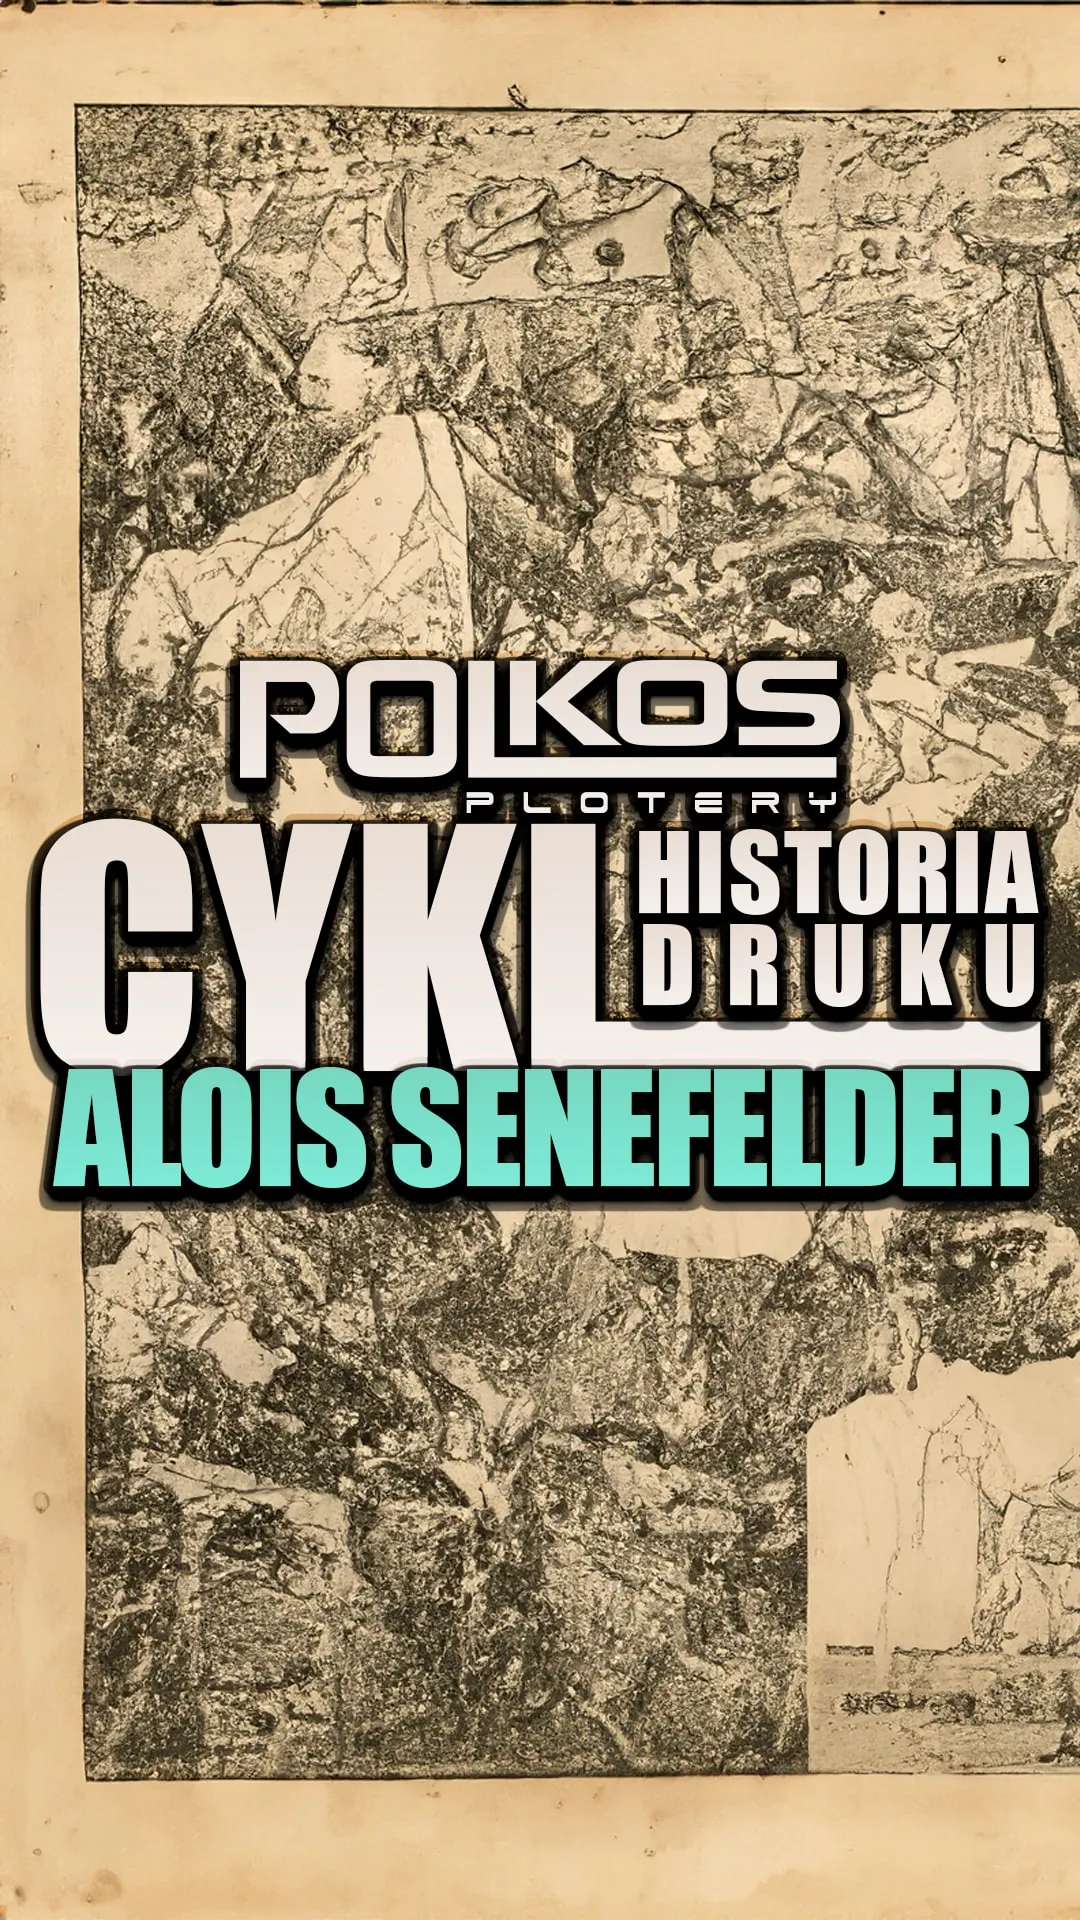 Cykl Historia Druku. Alois Senefelder. Litografia